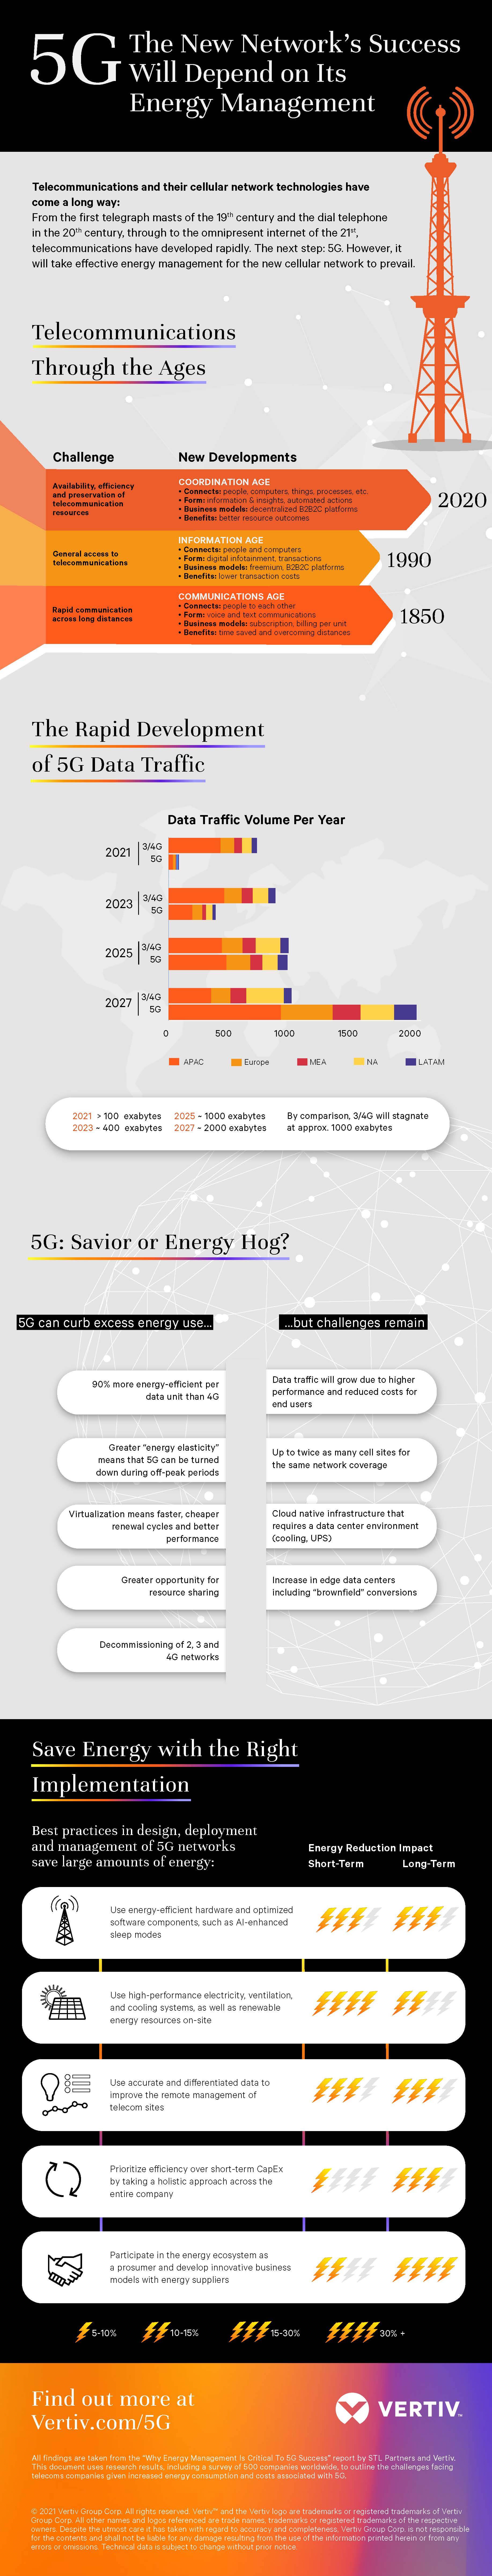 Vertiv 5G Infographic_NL-IN-NA